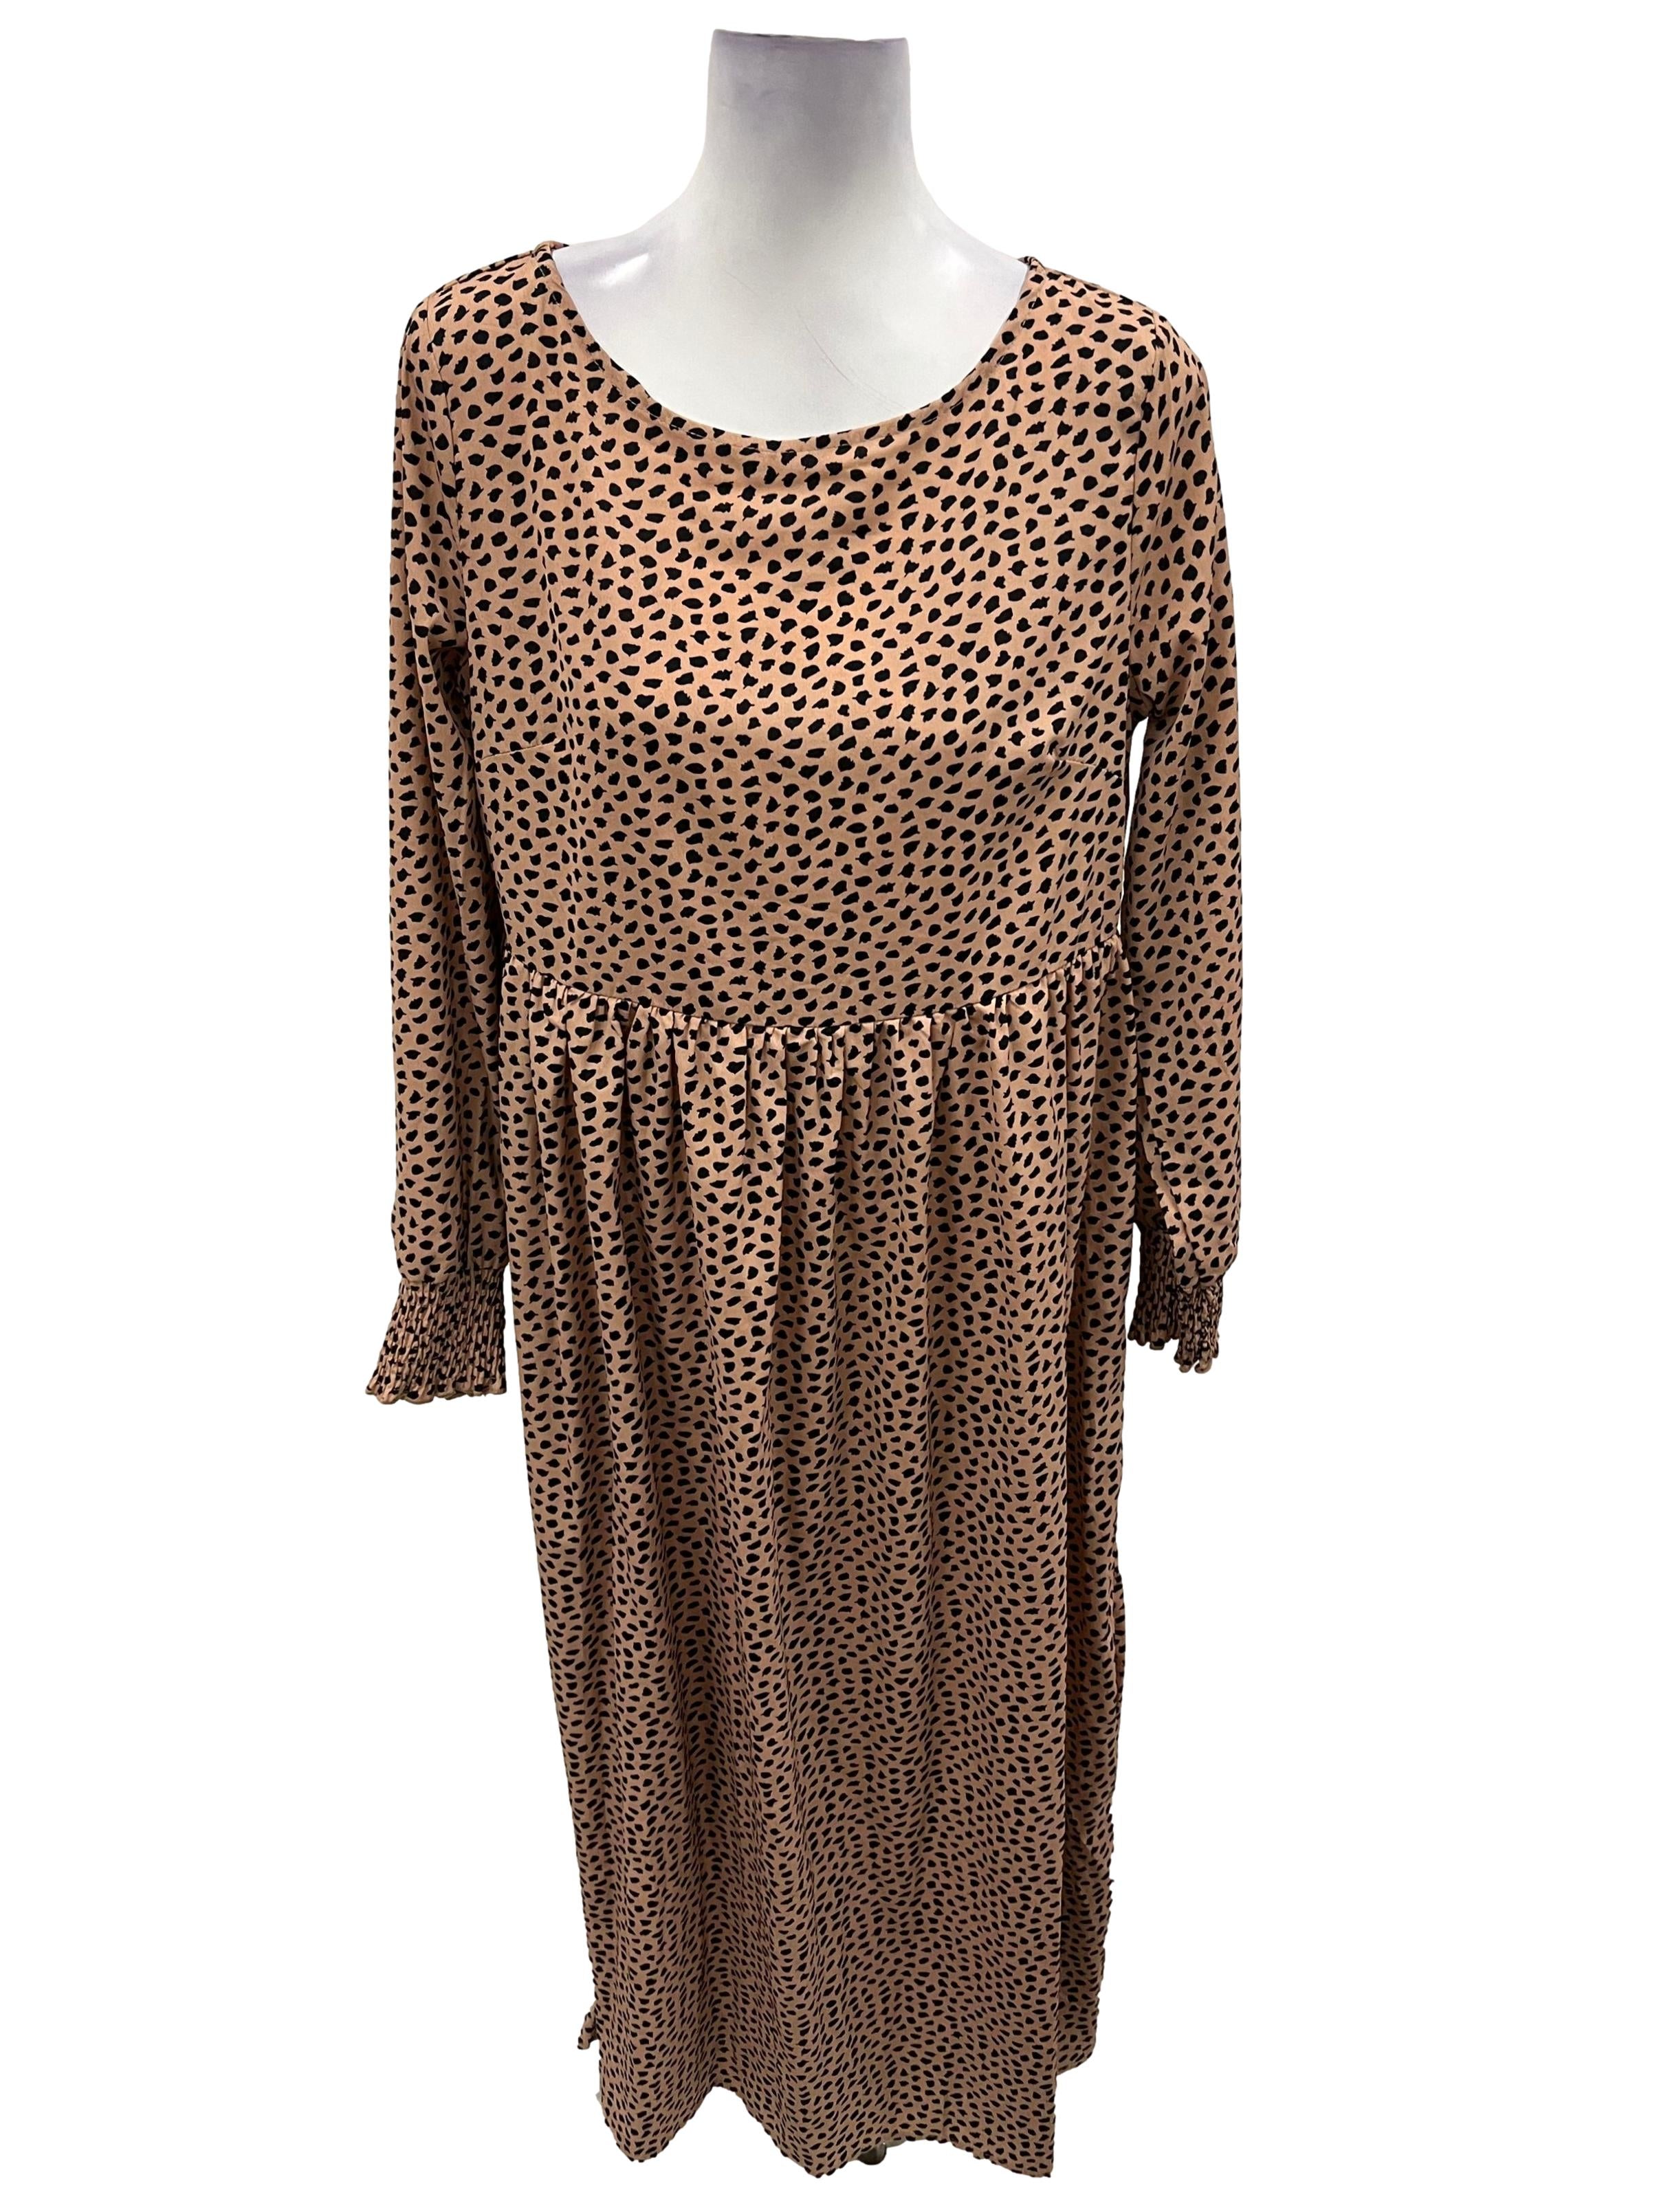 Pink Cheetah Print Dress